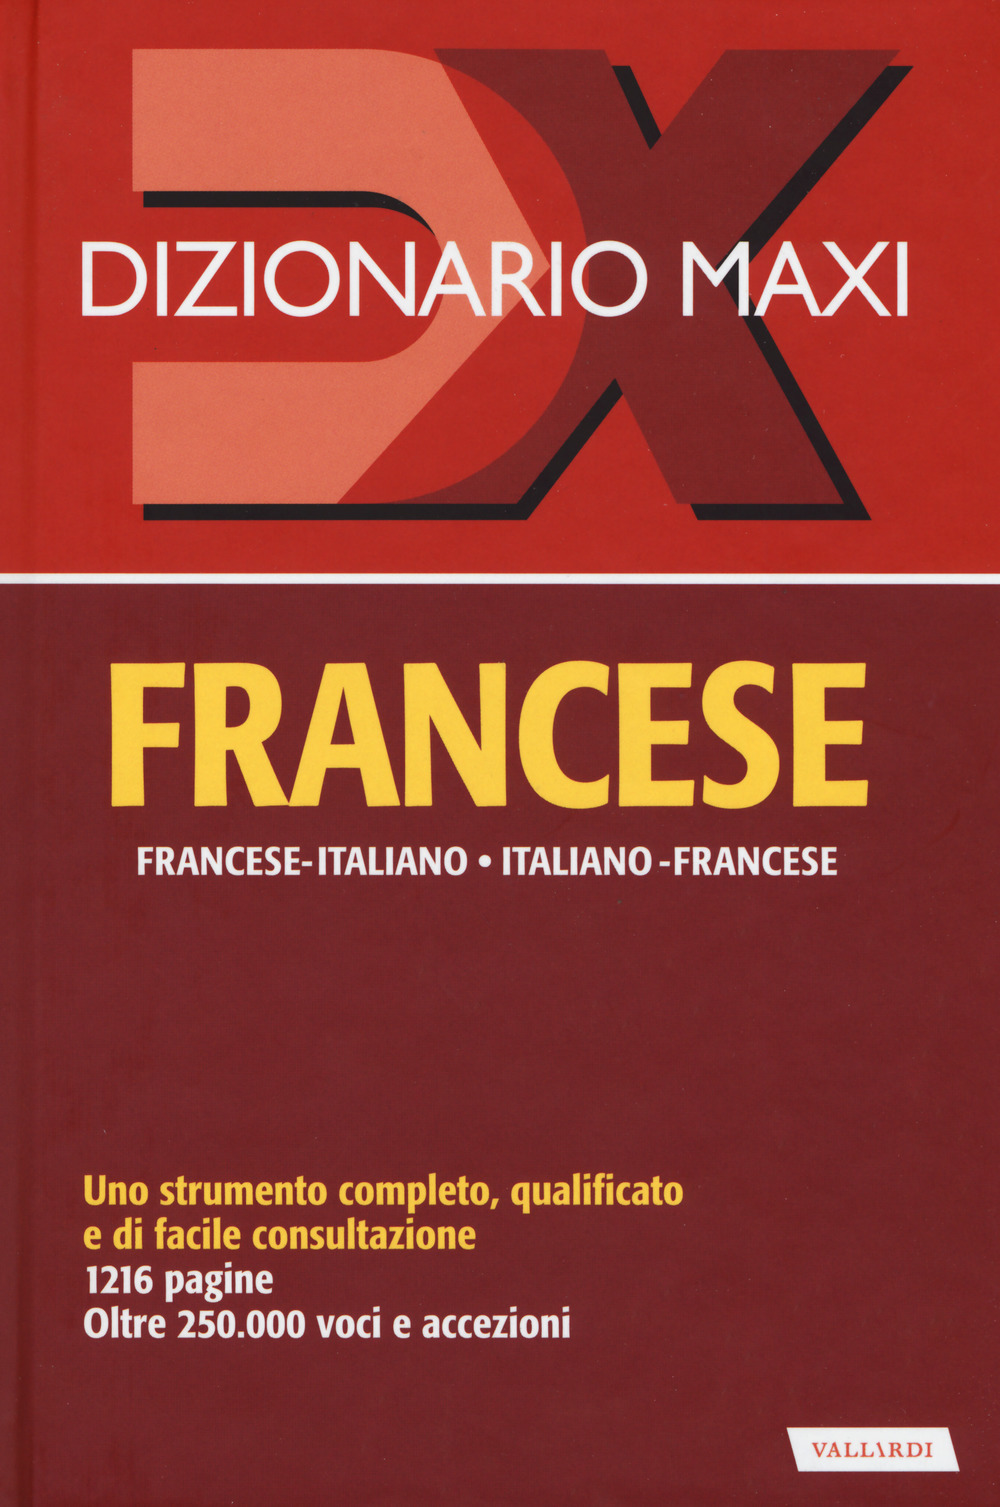 Dizionario maxi. Francese. Francese-italiano, italiano-francese. Nuova ediz.